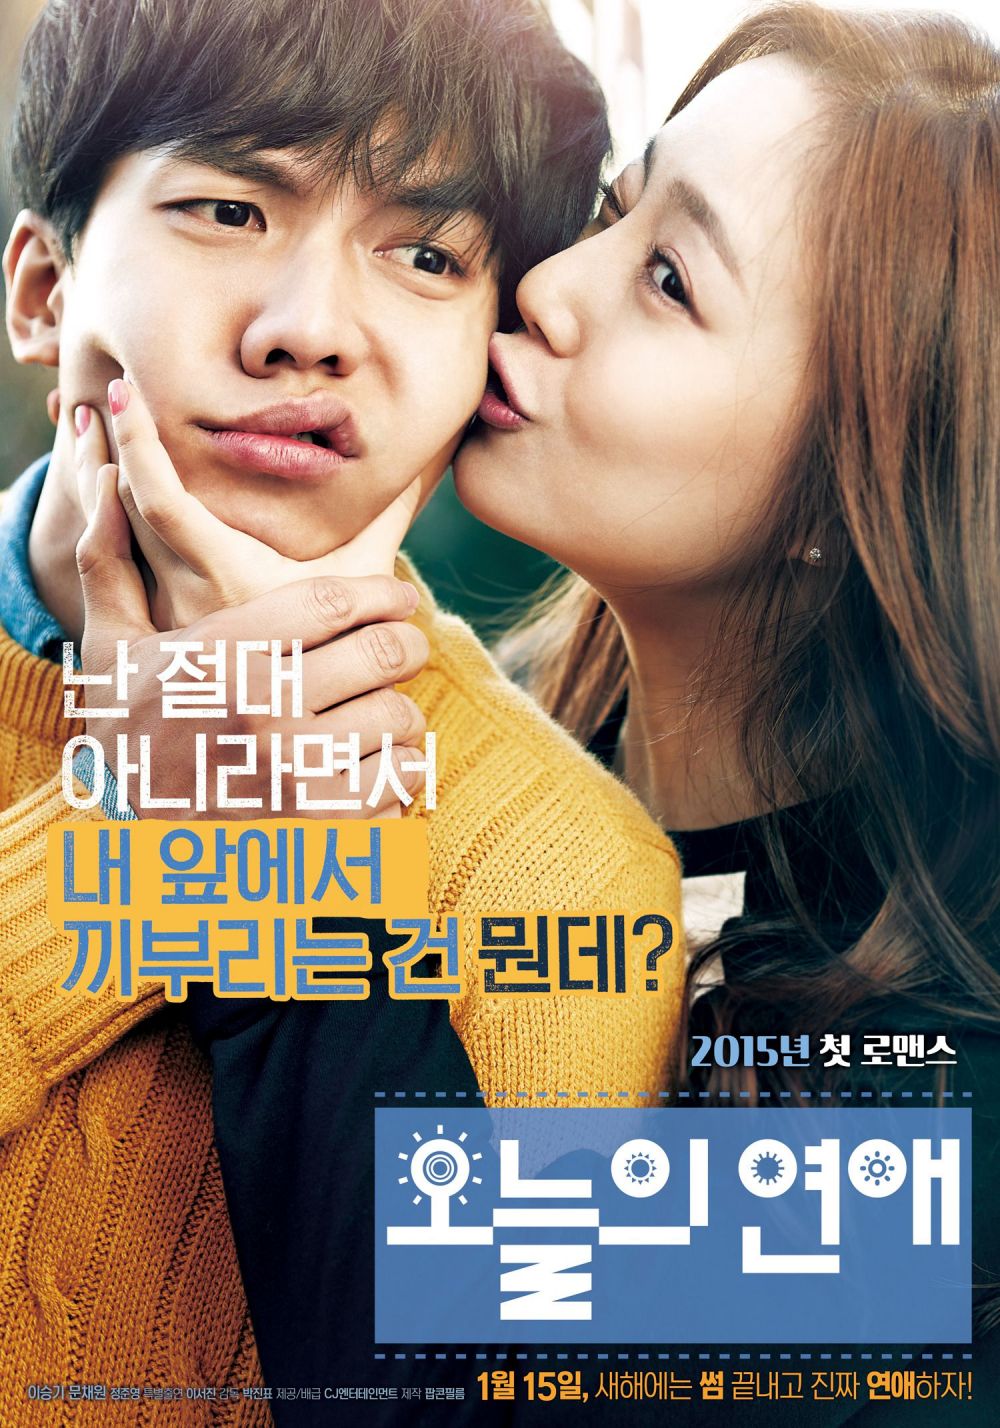 11 Rekomendasi film Korea romantis, temanimu rayakan Valentine